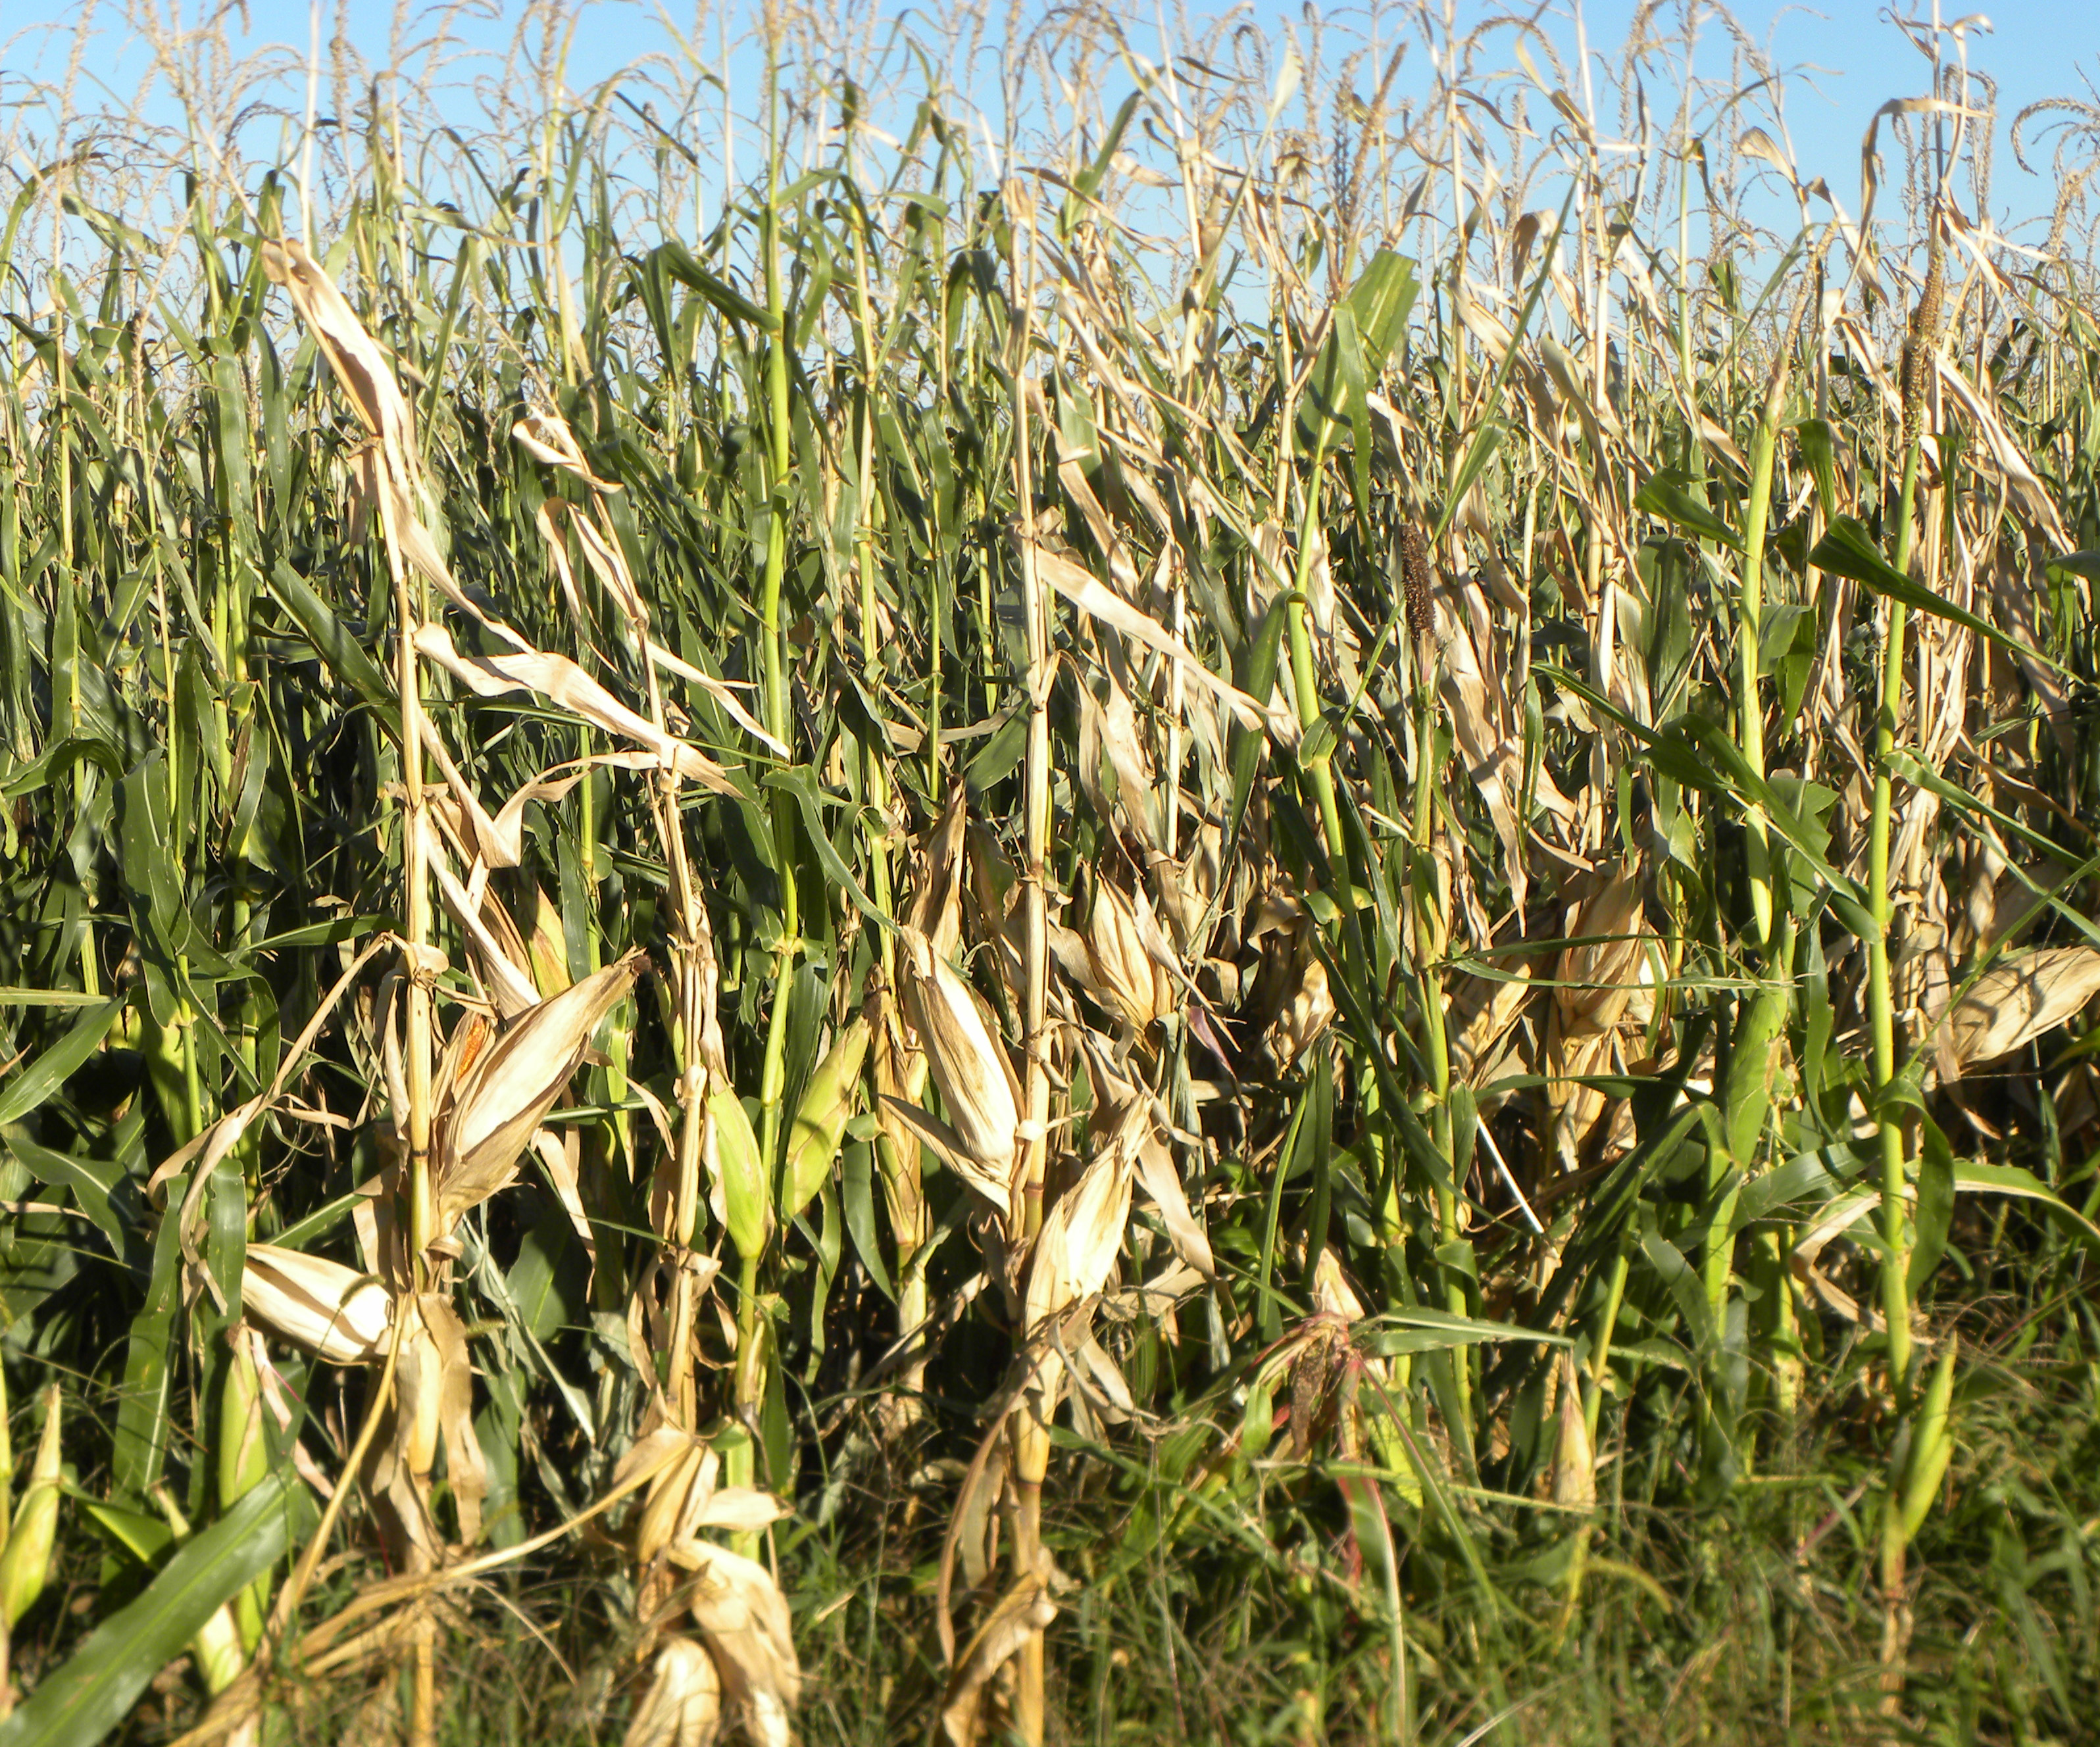 Corn field exhibiting stalk rot symptoms